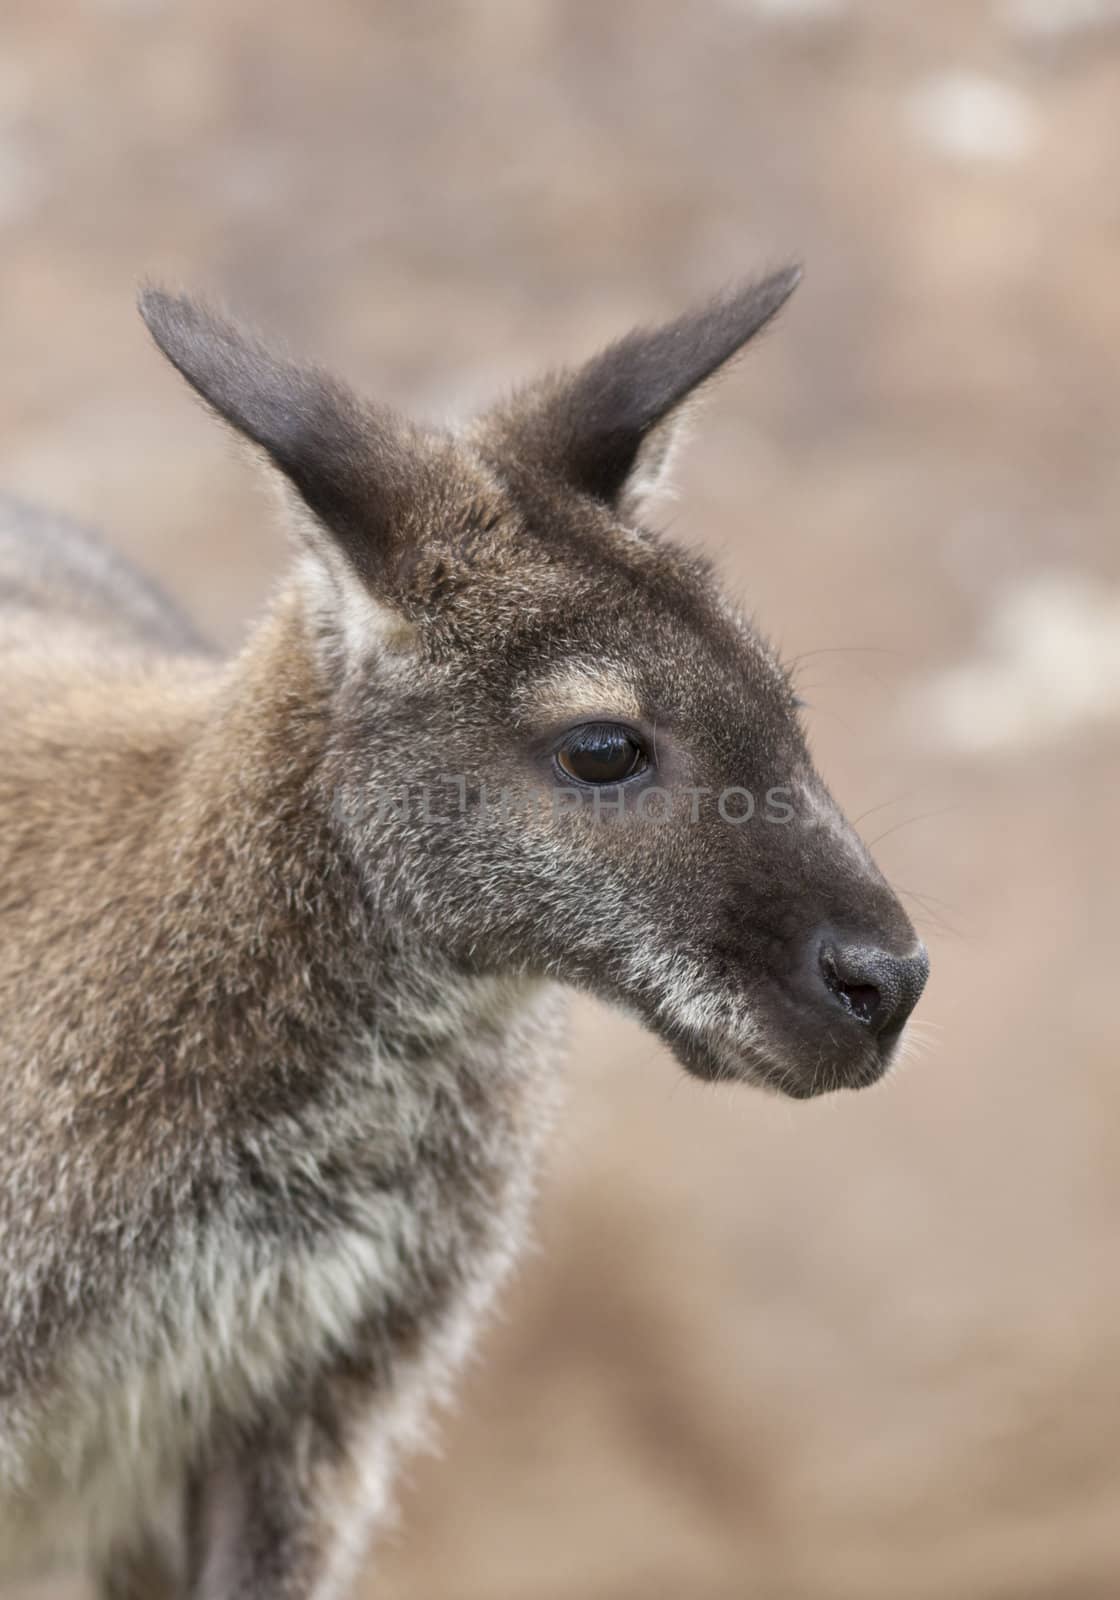 A close up shot of a wallaby.